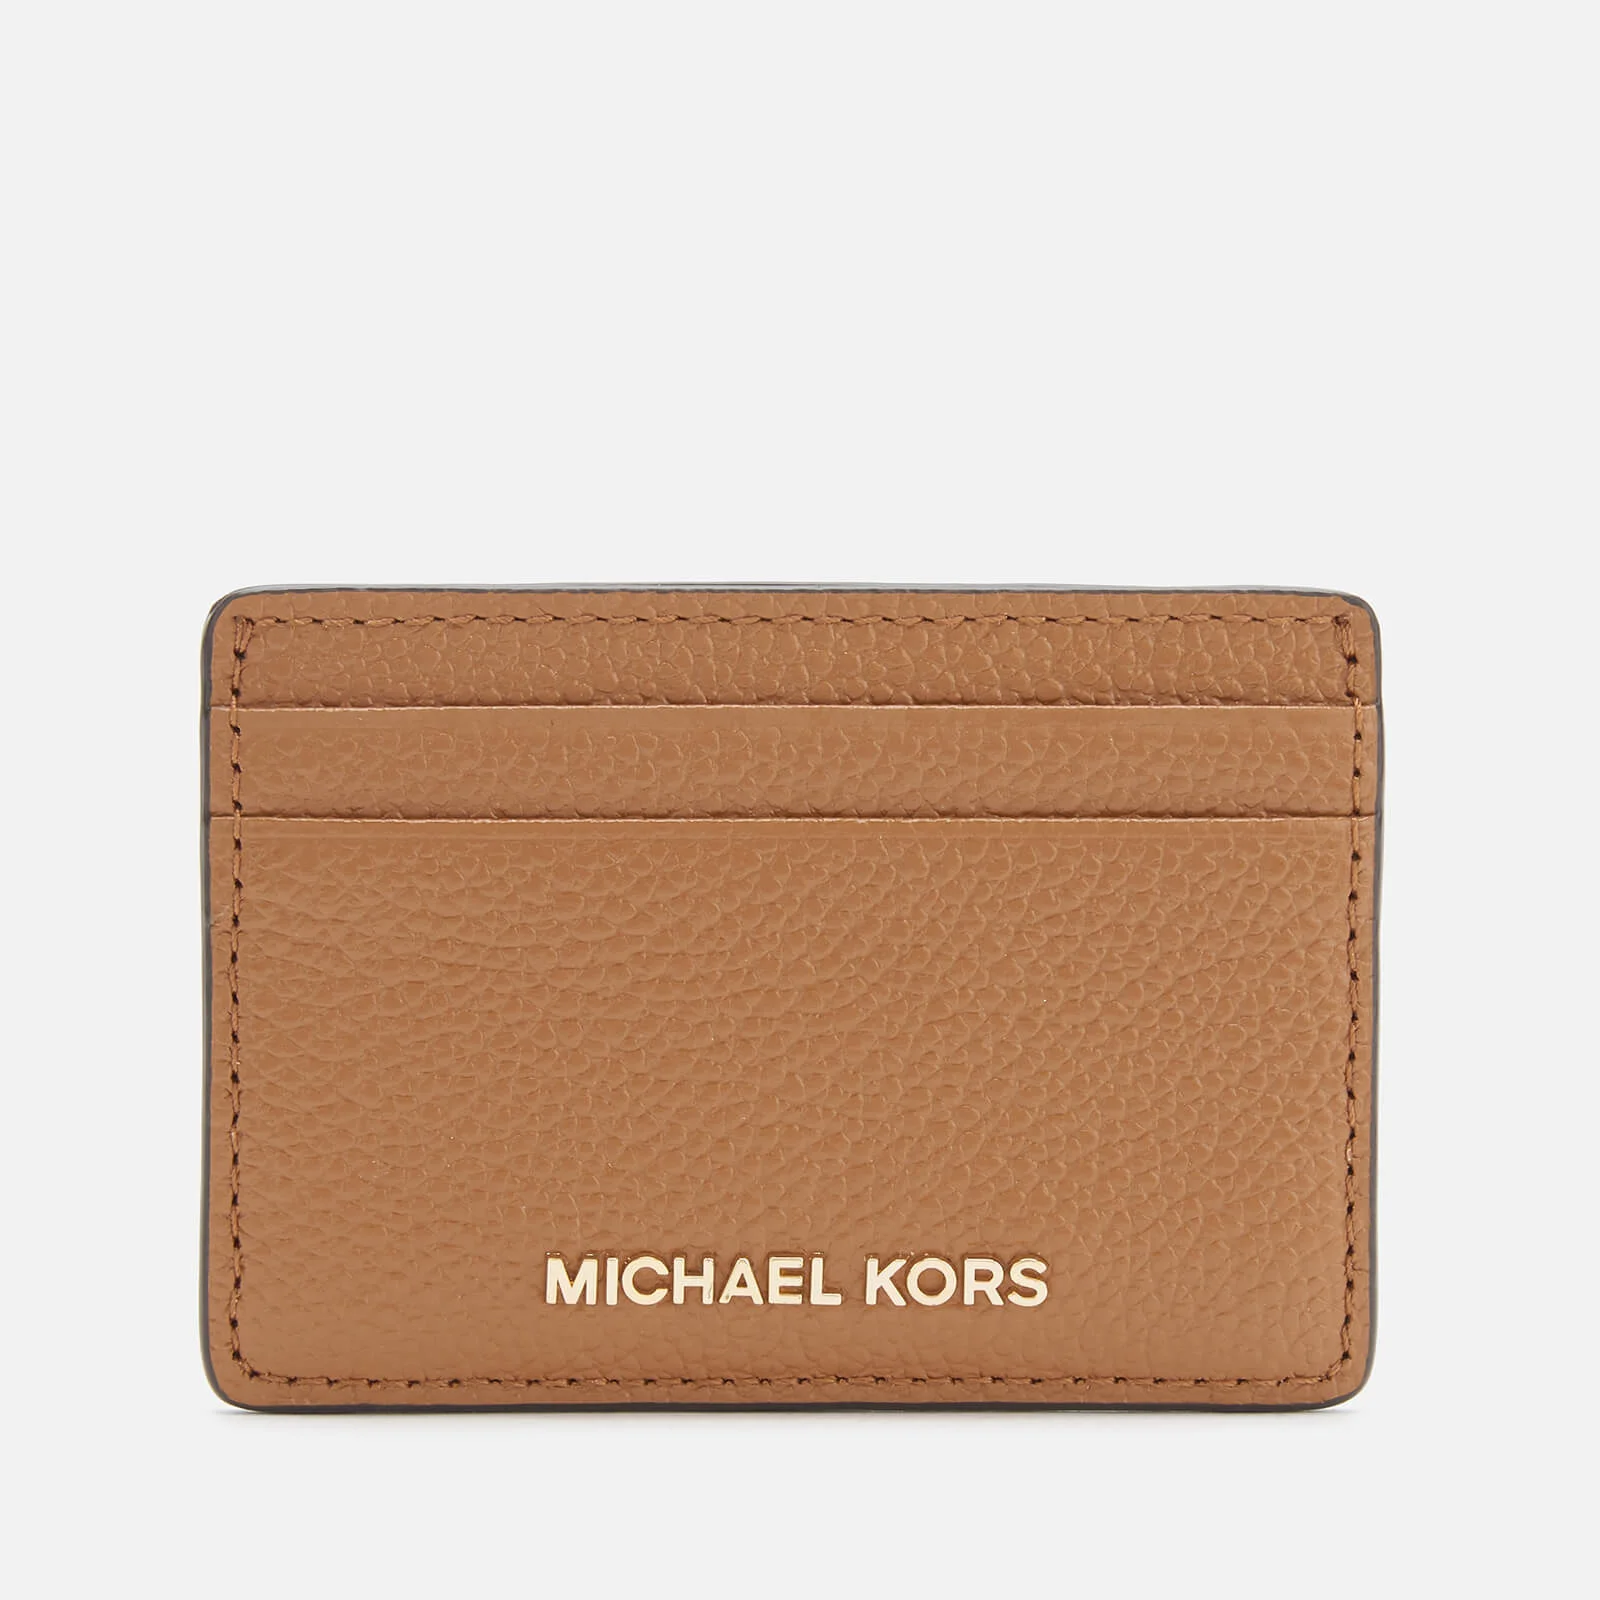 Michael Kors Women's Money Pieces Card Holder - ACORN Image 1